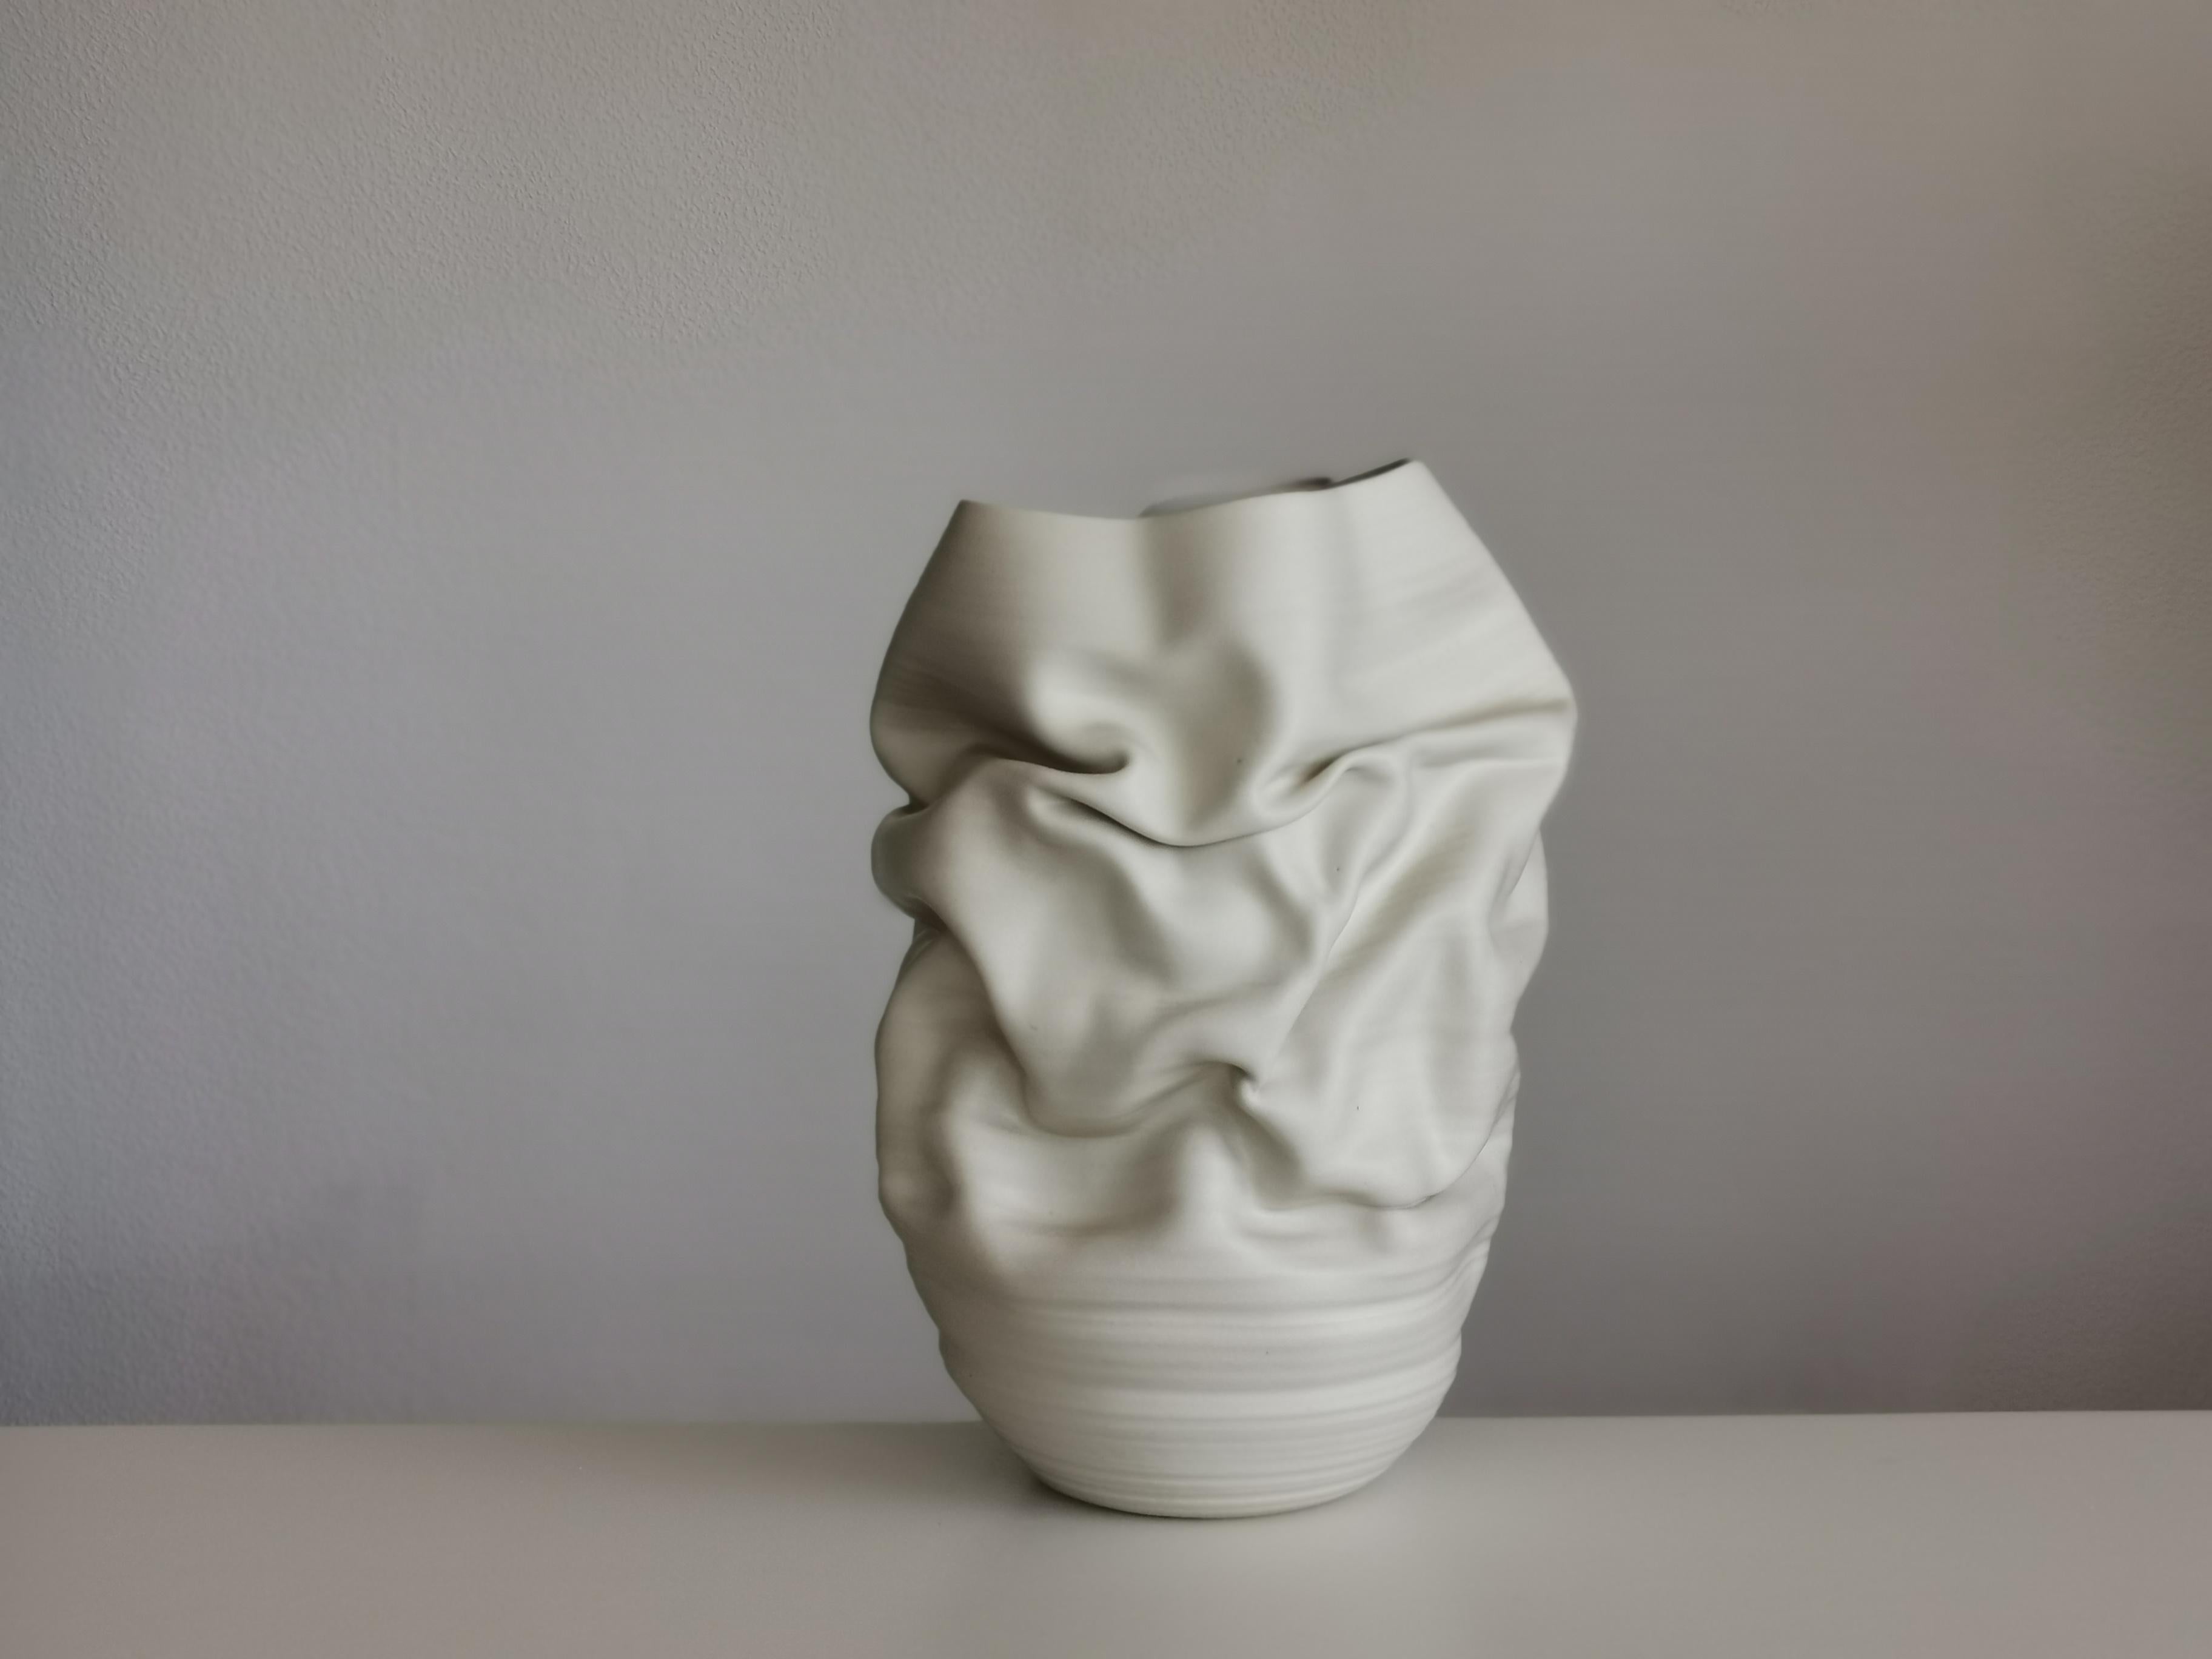 White Deflated Crumpled Form, Vase, Interior Sculpture or Vessel, Objet D'Art 2